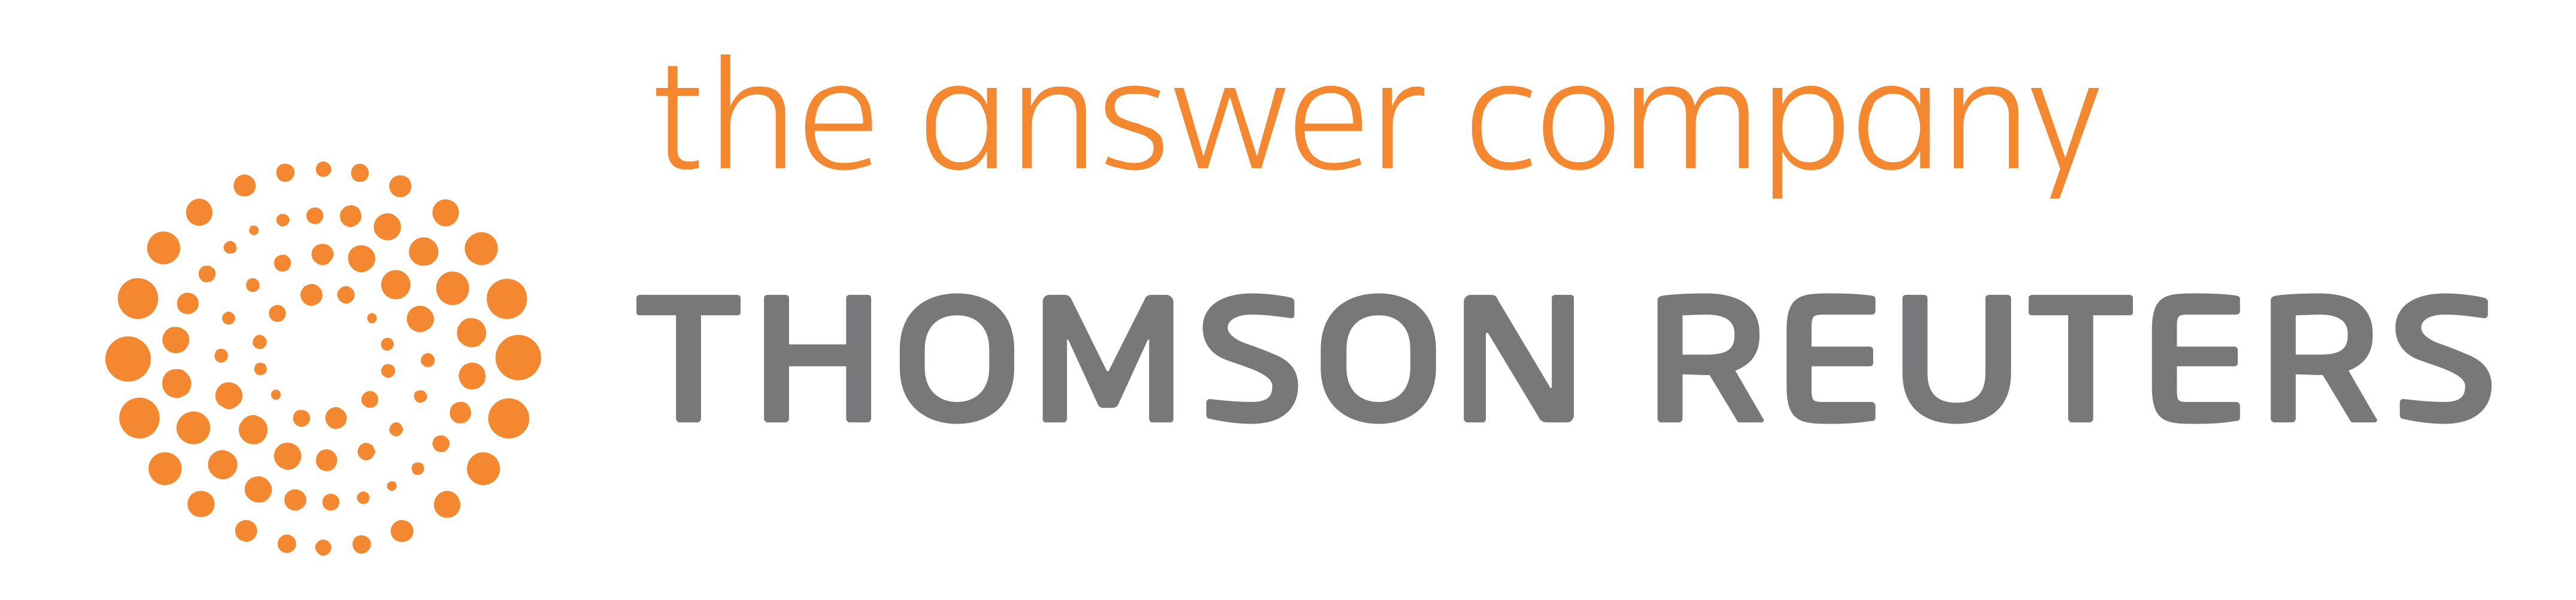 Logo Thomson Reuters